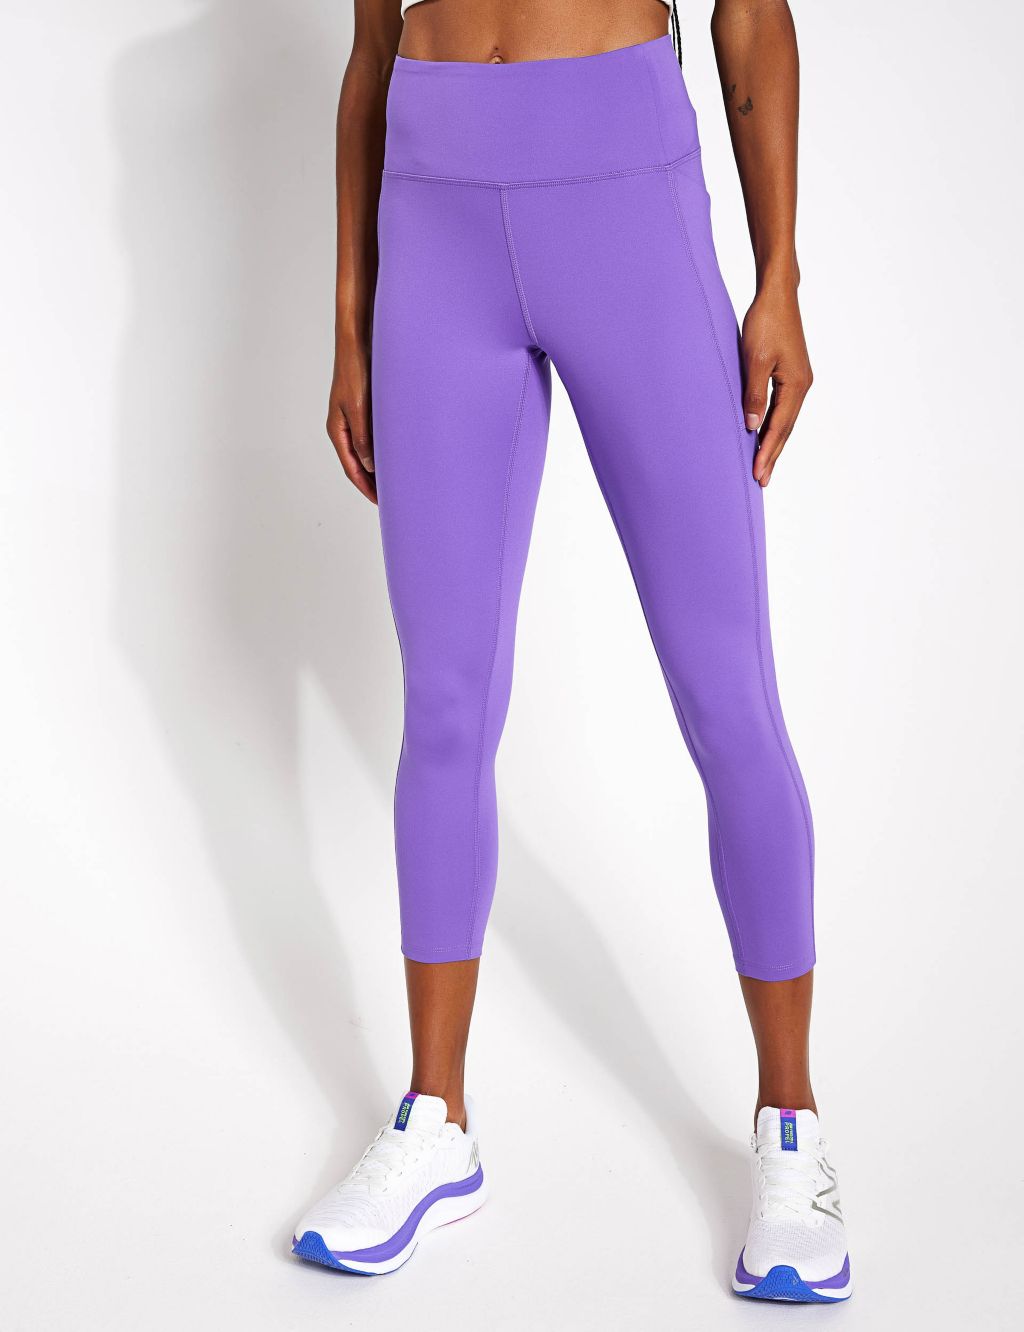 Nike Women's Dri Fit 7/8 Length Leggings Purple Size X-Small 